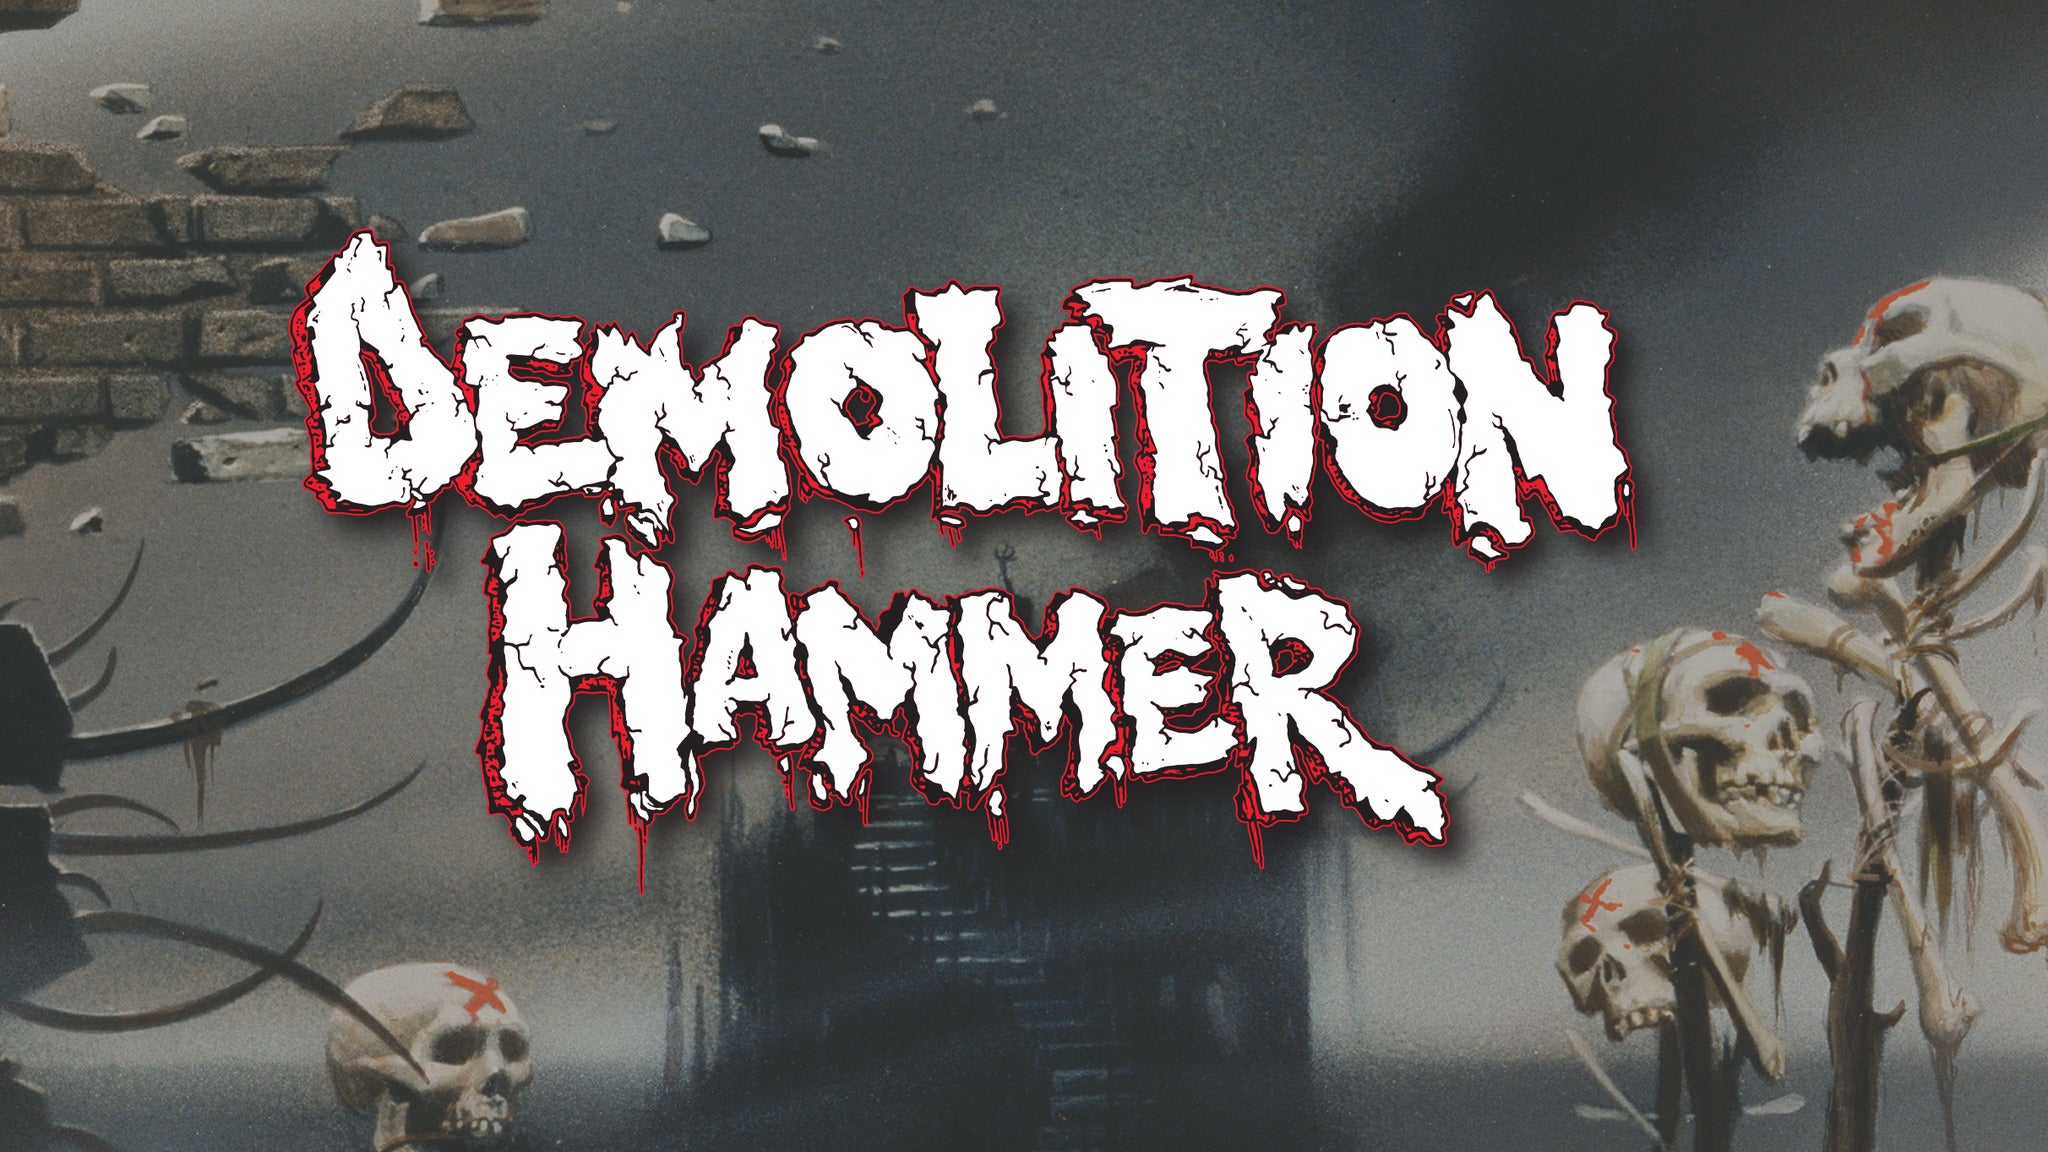 Demolition Hammer in New York promo photo for Live Nation presale offer code